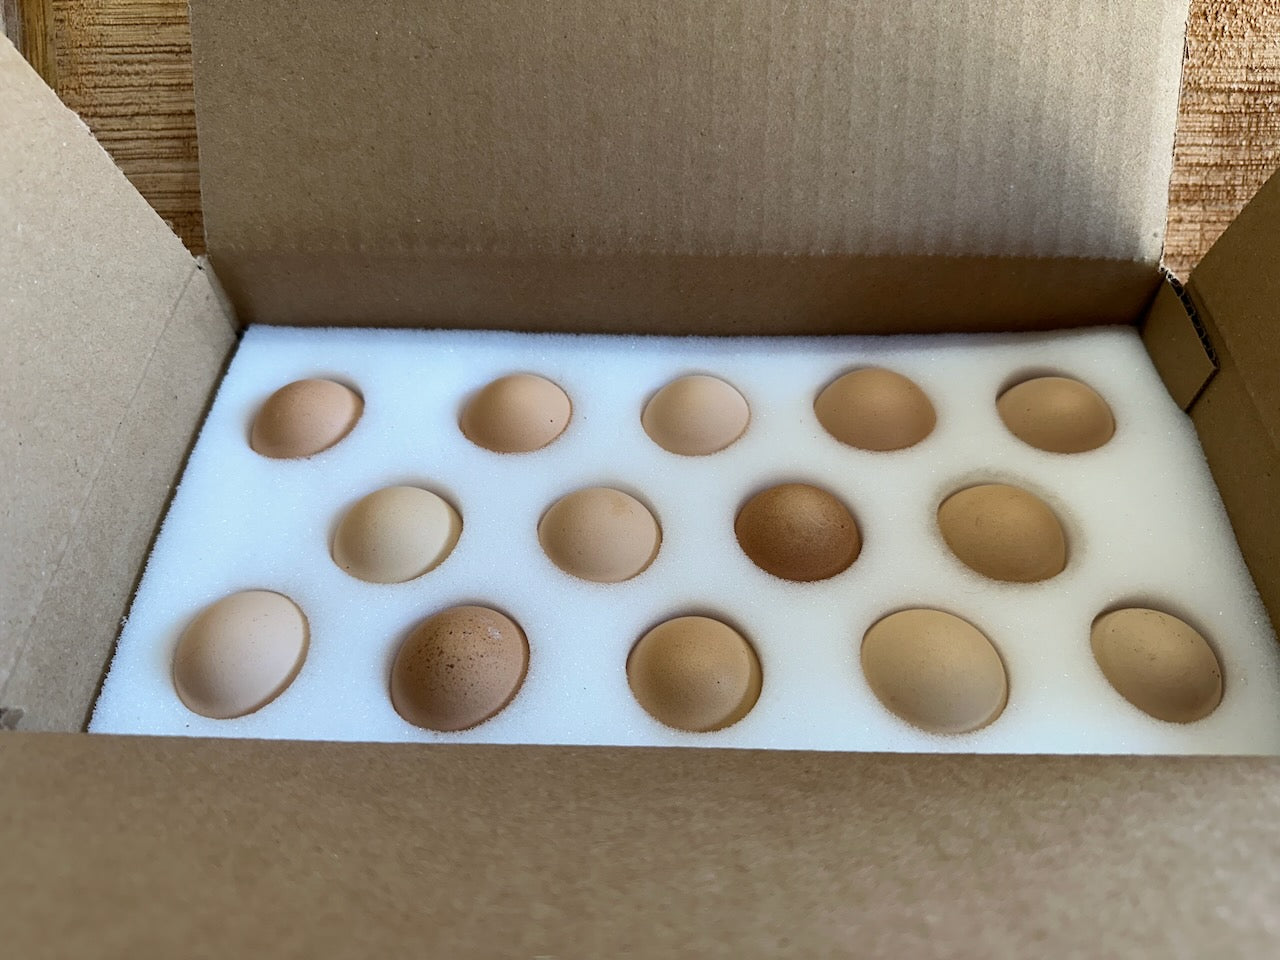 Eggs in shipping box with foam shipper